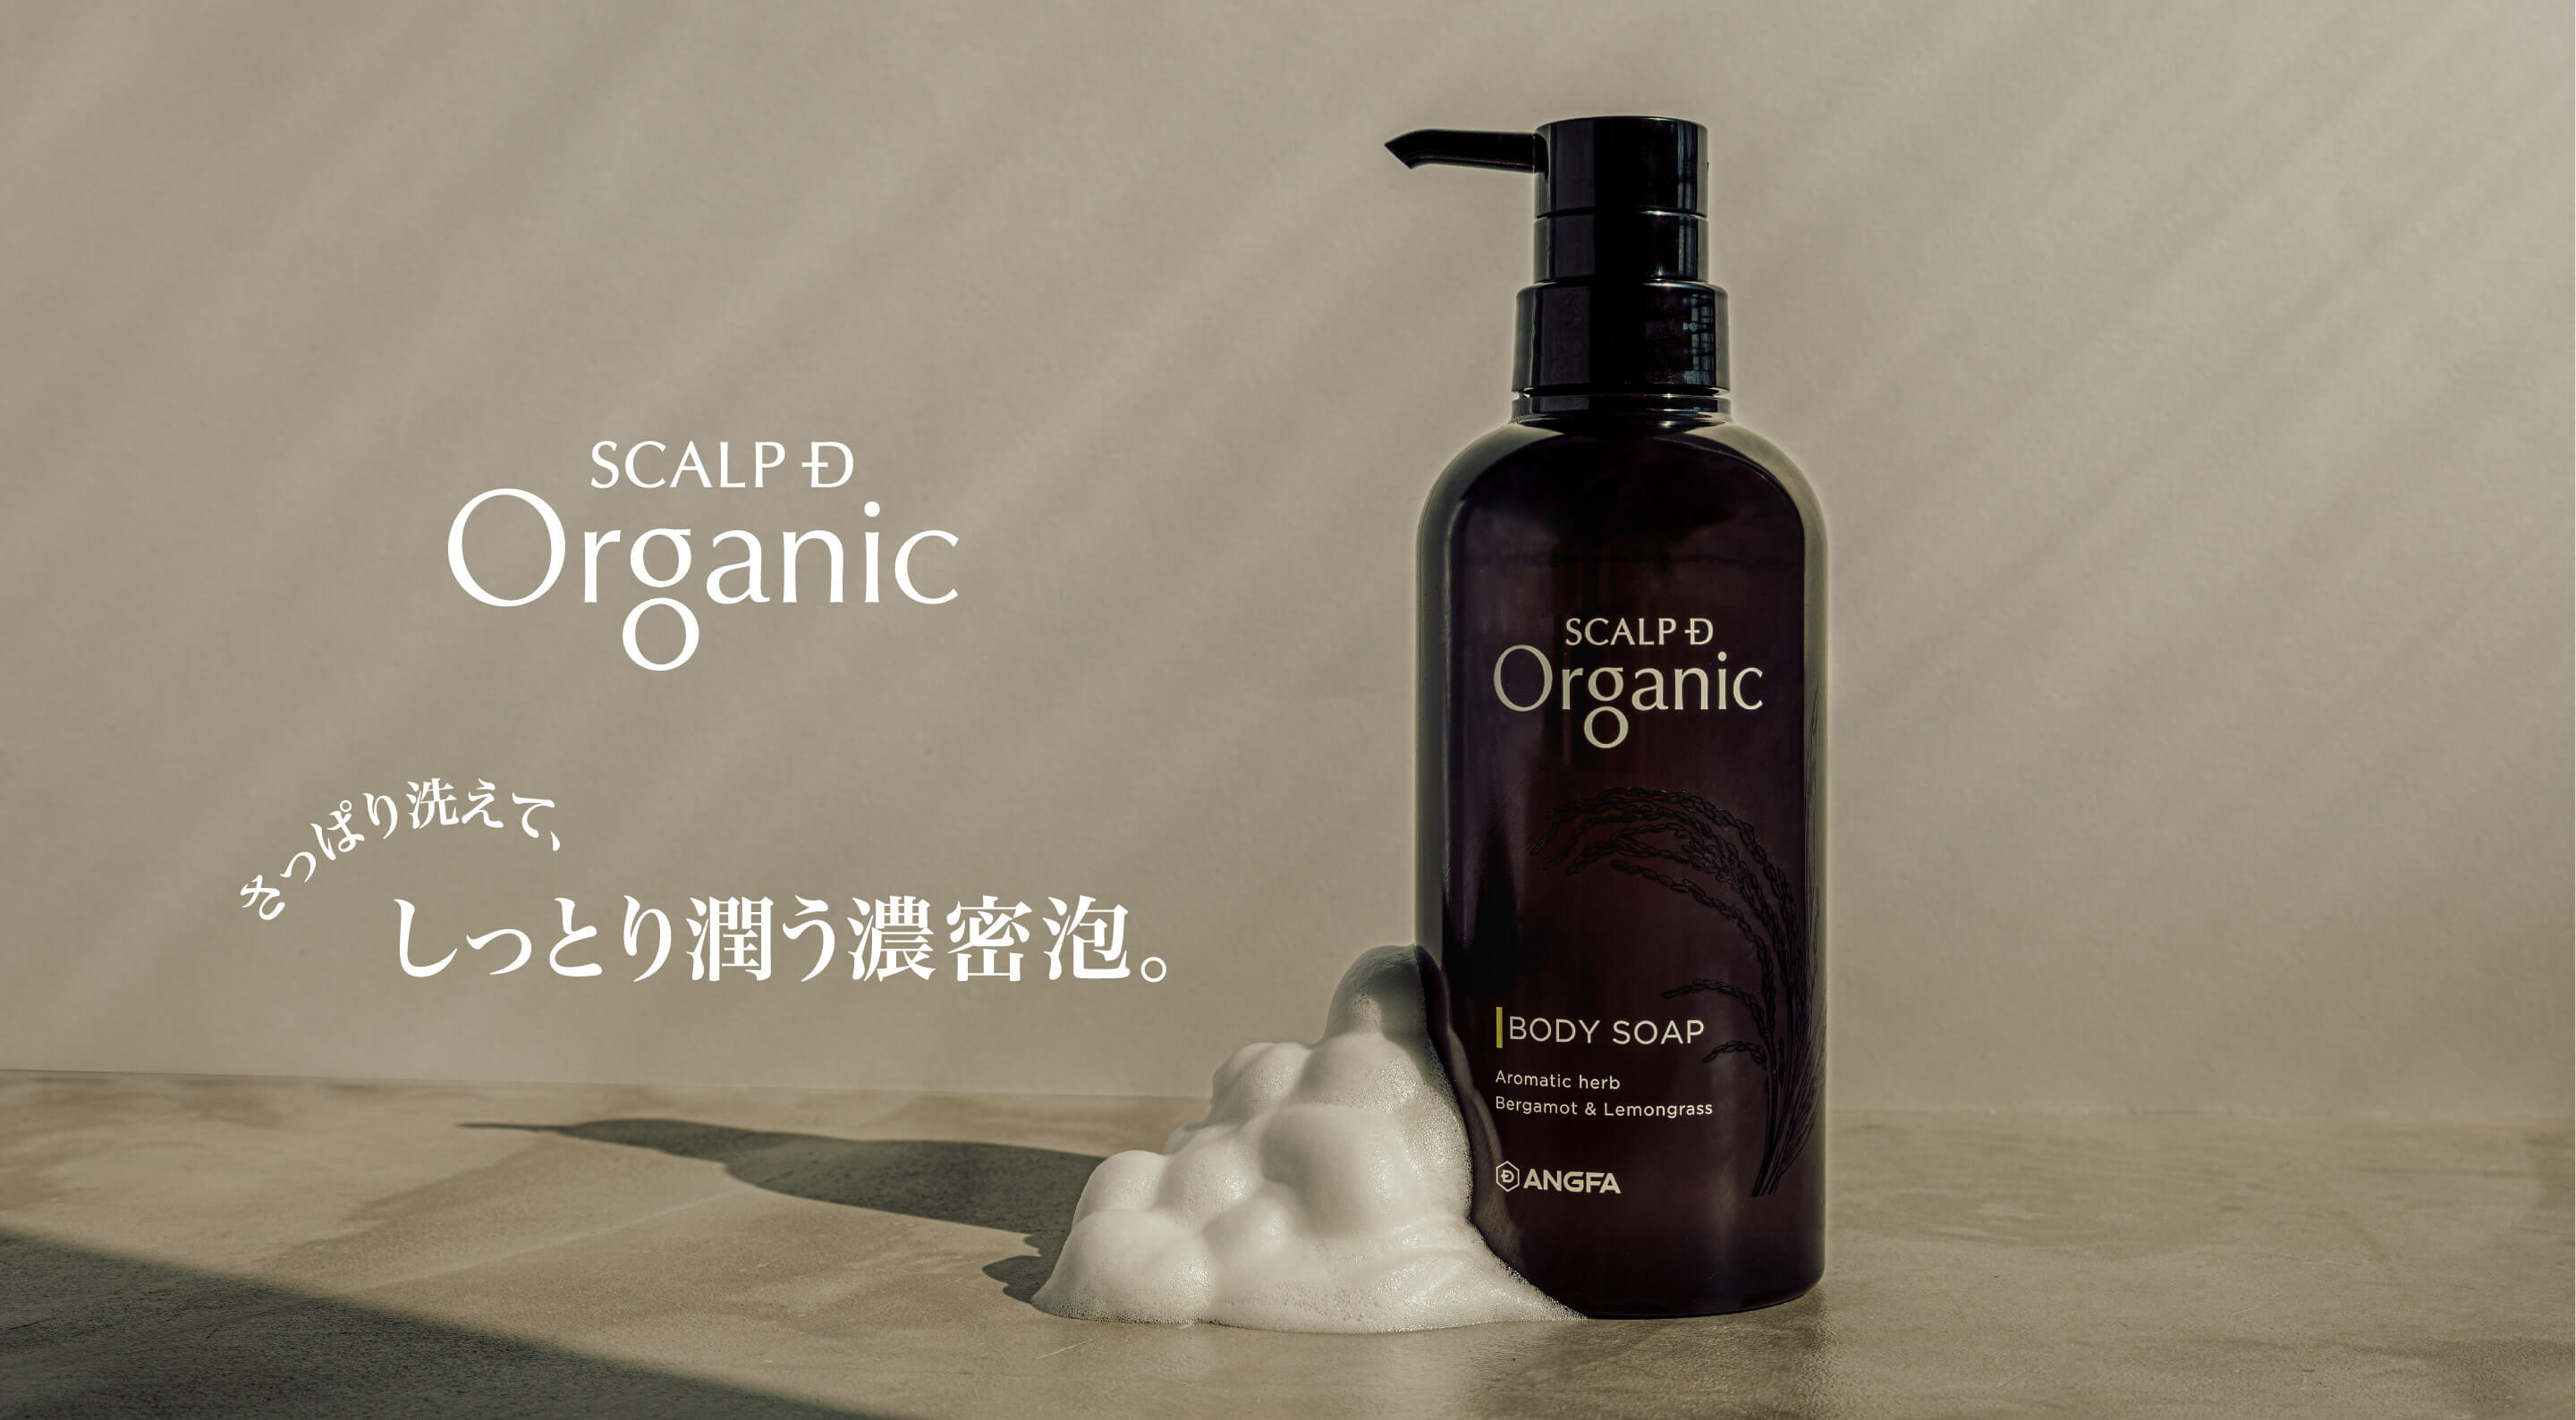 SCALP D Organic さっぱり洗えて、しっとり潤う濃密泡。